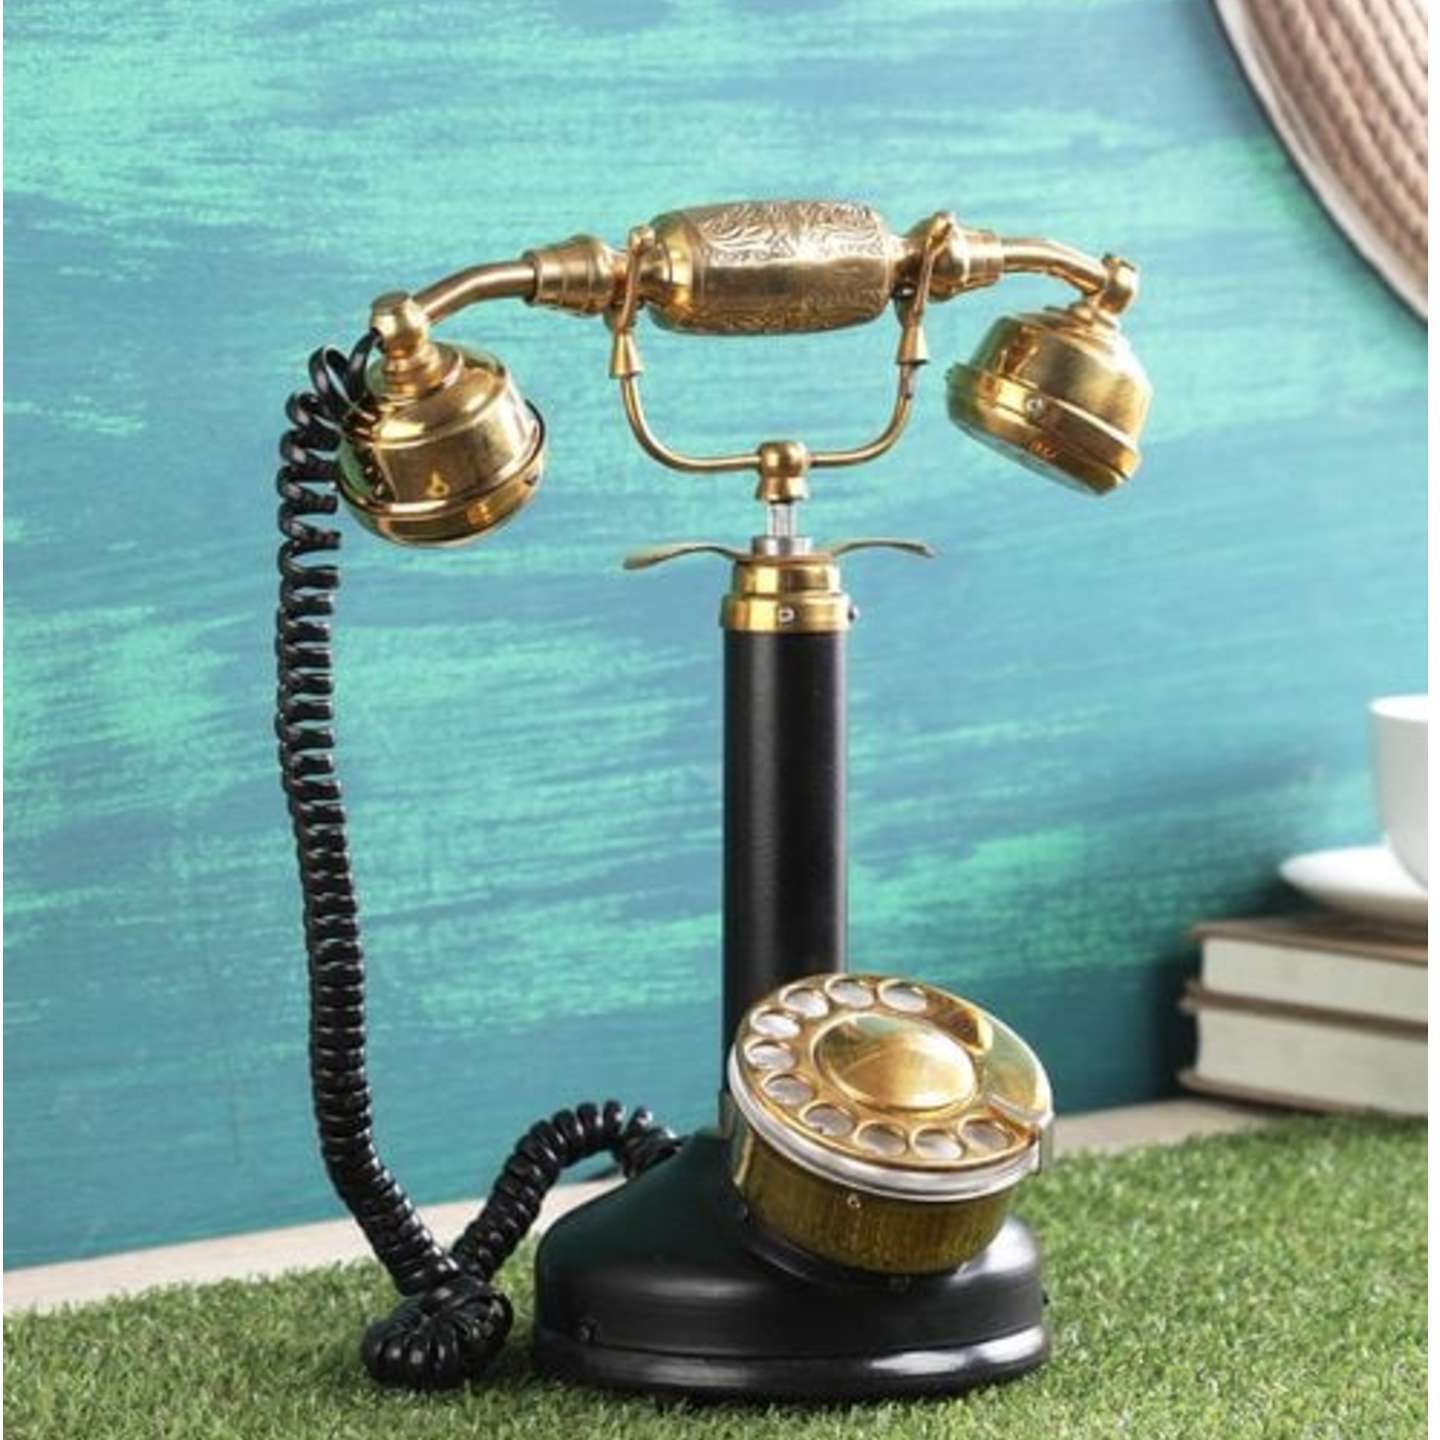 Retro Phone, Dial Phone, Bell Phone, Old Phone, Rotary Phone, Vintage